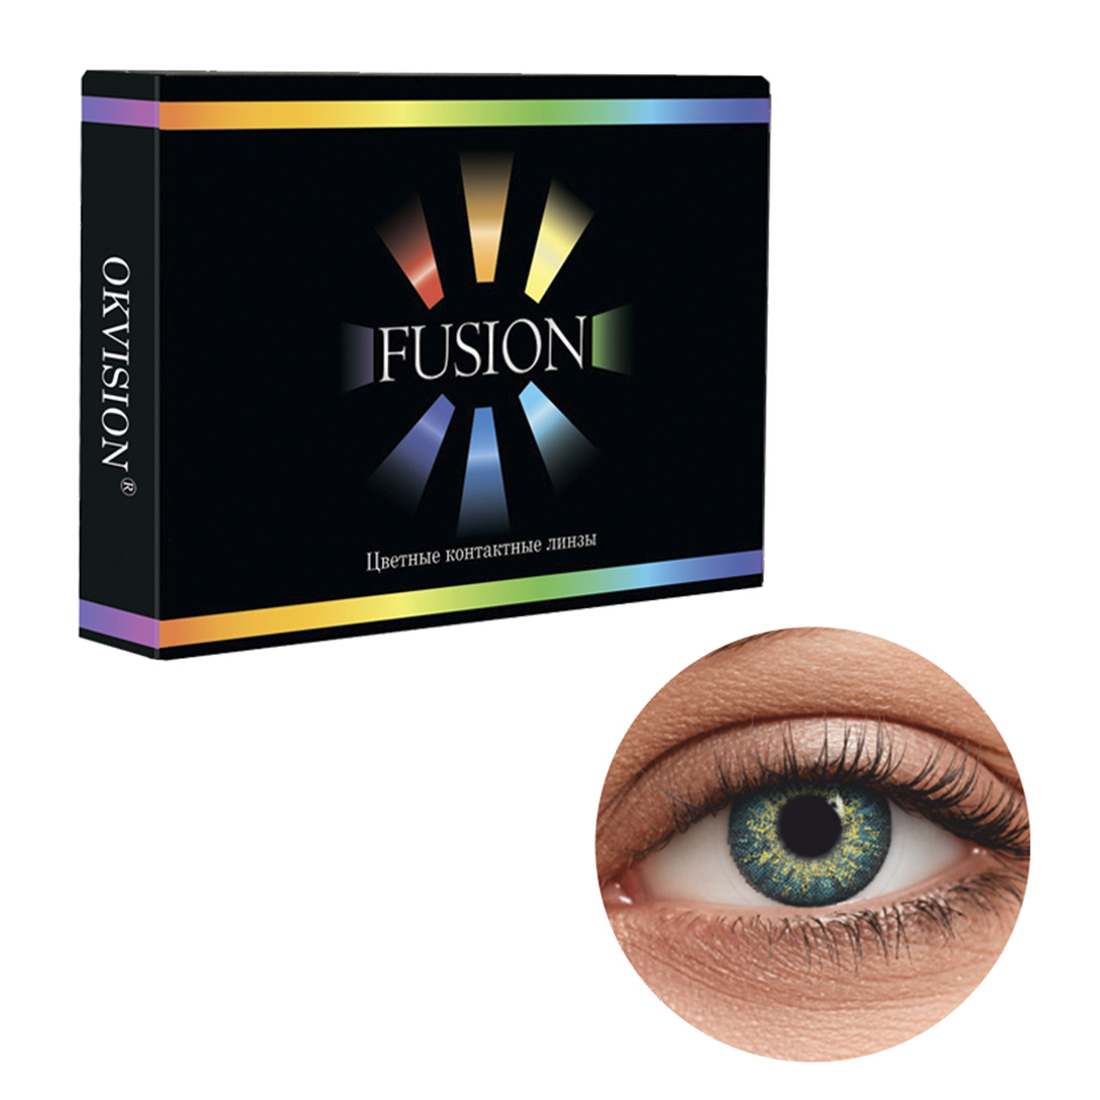 Цветные контактные линзы OKVision Fusion monthly R 8.6 -5.00 цвет Azure 2 шт 1 месяц - фото 1